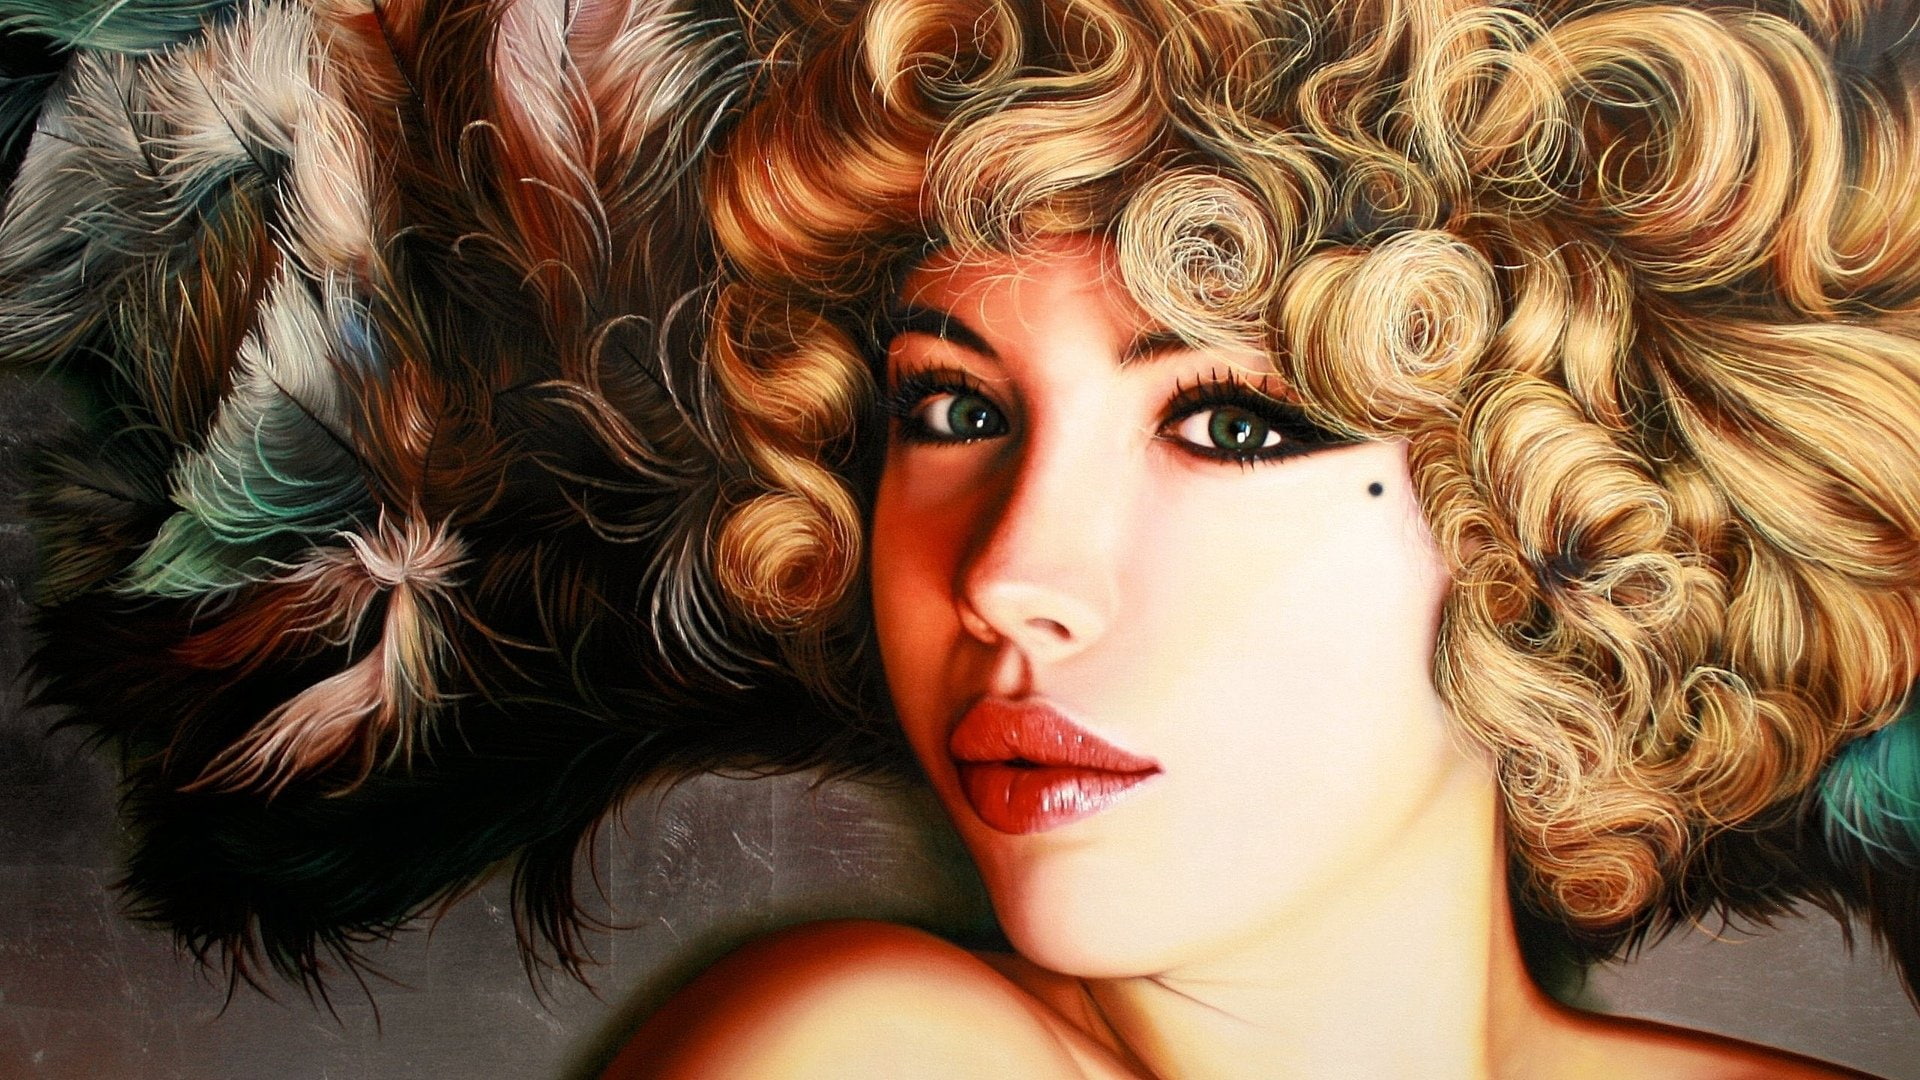 artwork, Blonde, Christiane Vleugels, eyes, face, lips, portrait